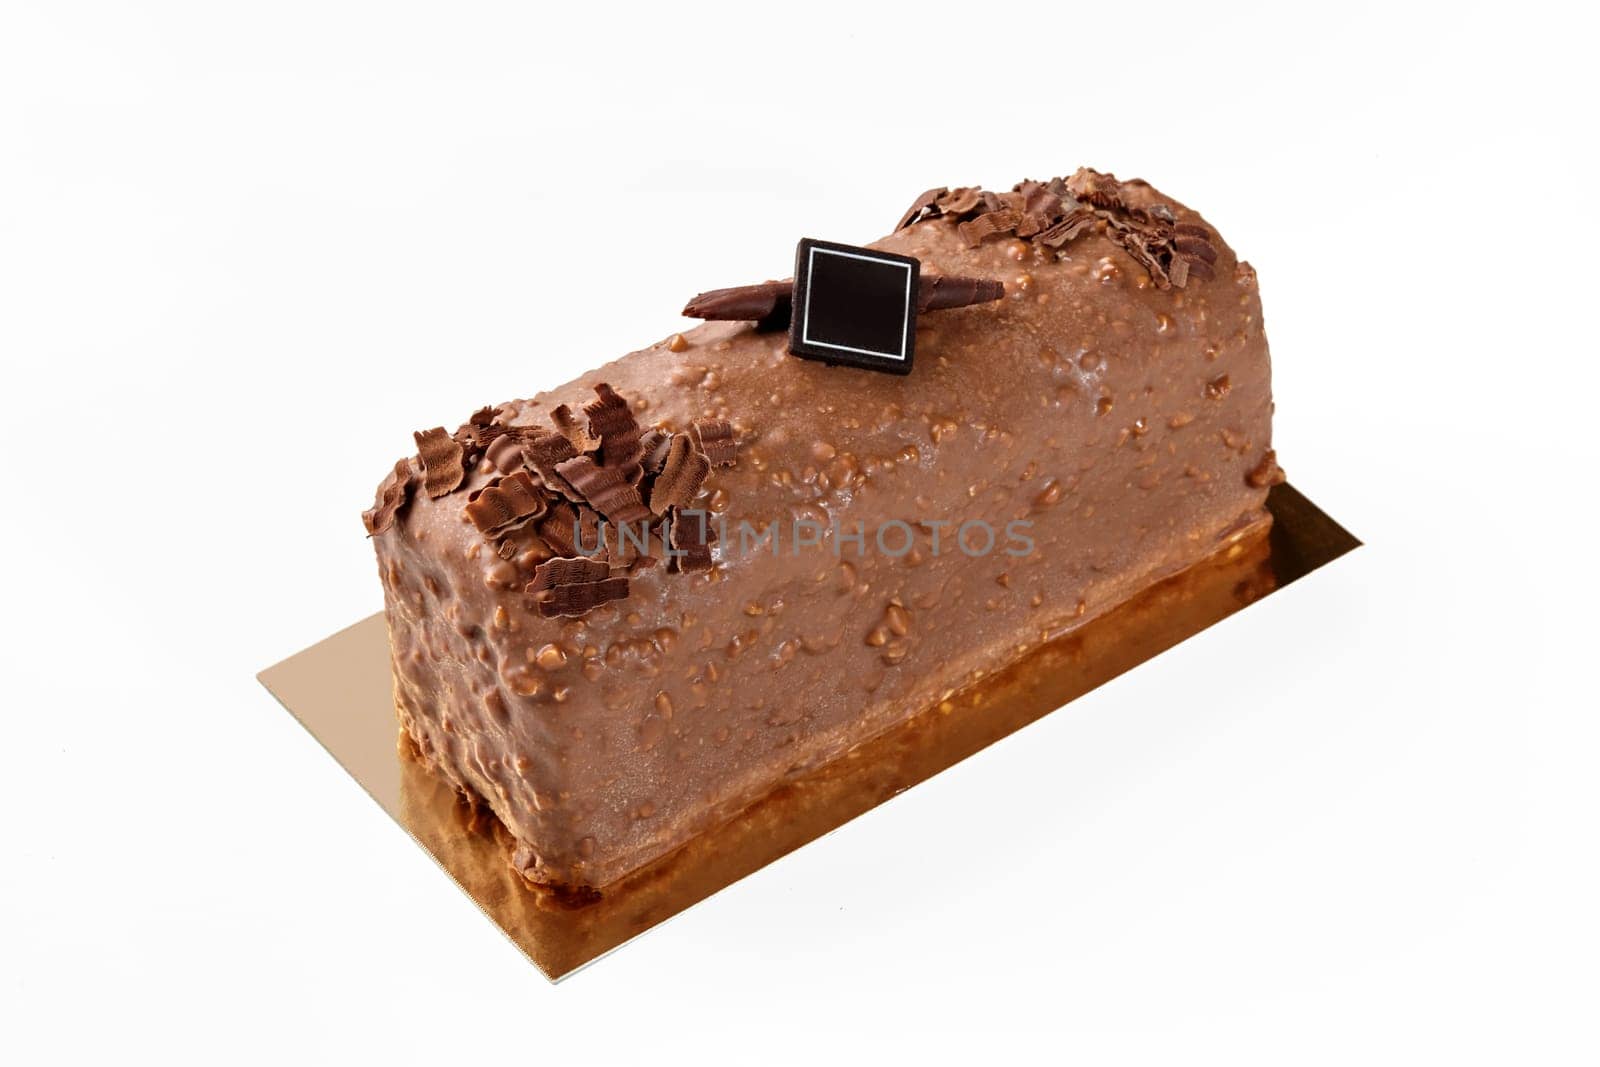 Artisanal loaf cake coated with milk chocolate and nuts glaze by nazarovsergey